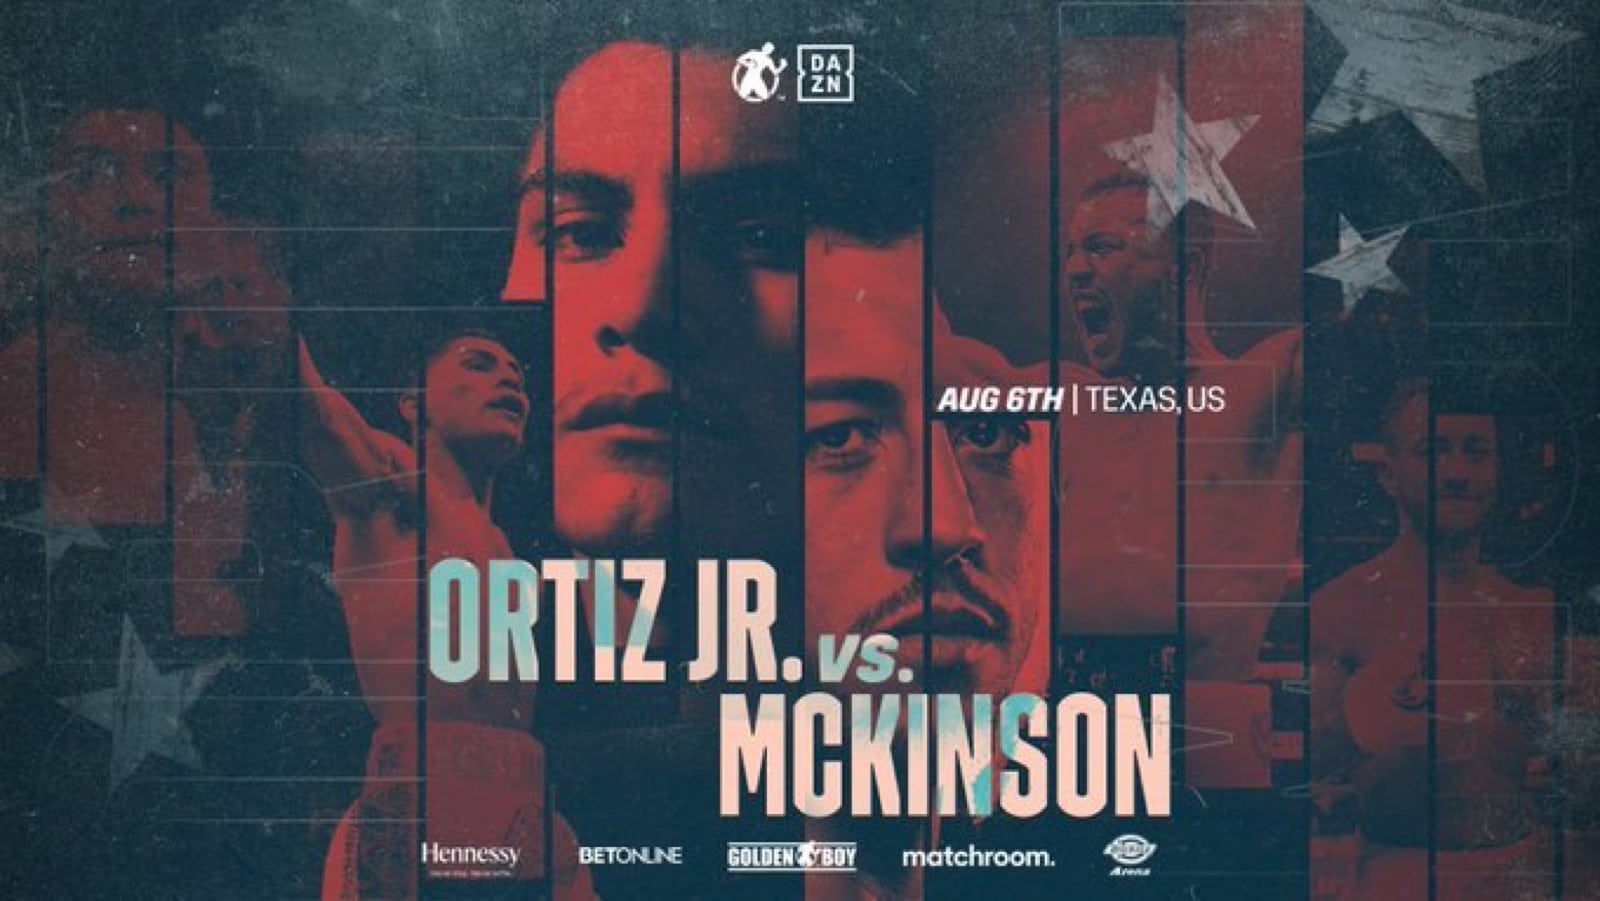 Michael McKinson, Vergil Ortiz boxing image / photo